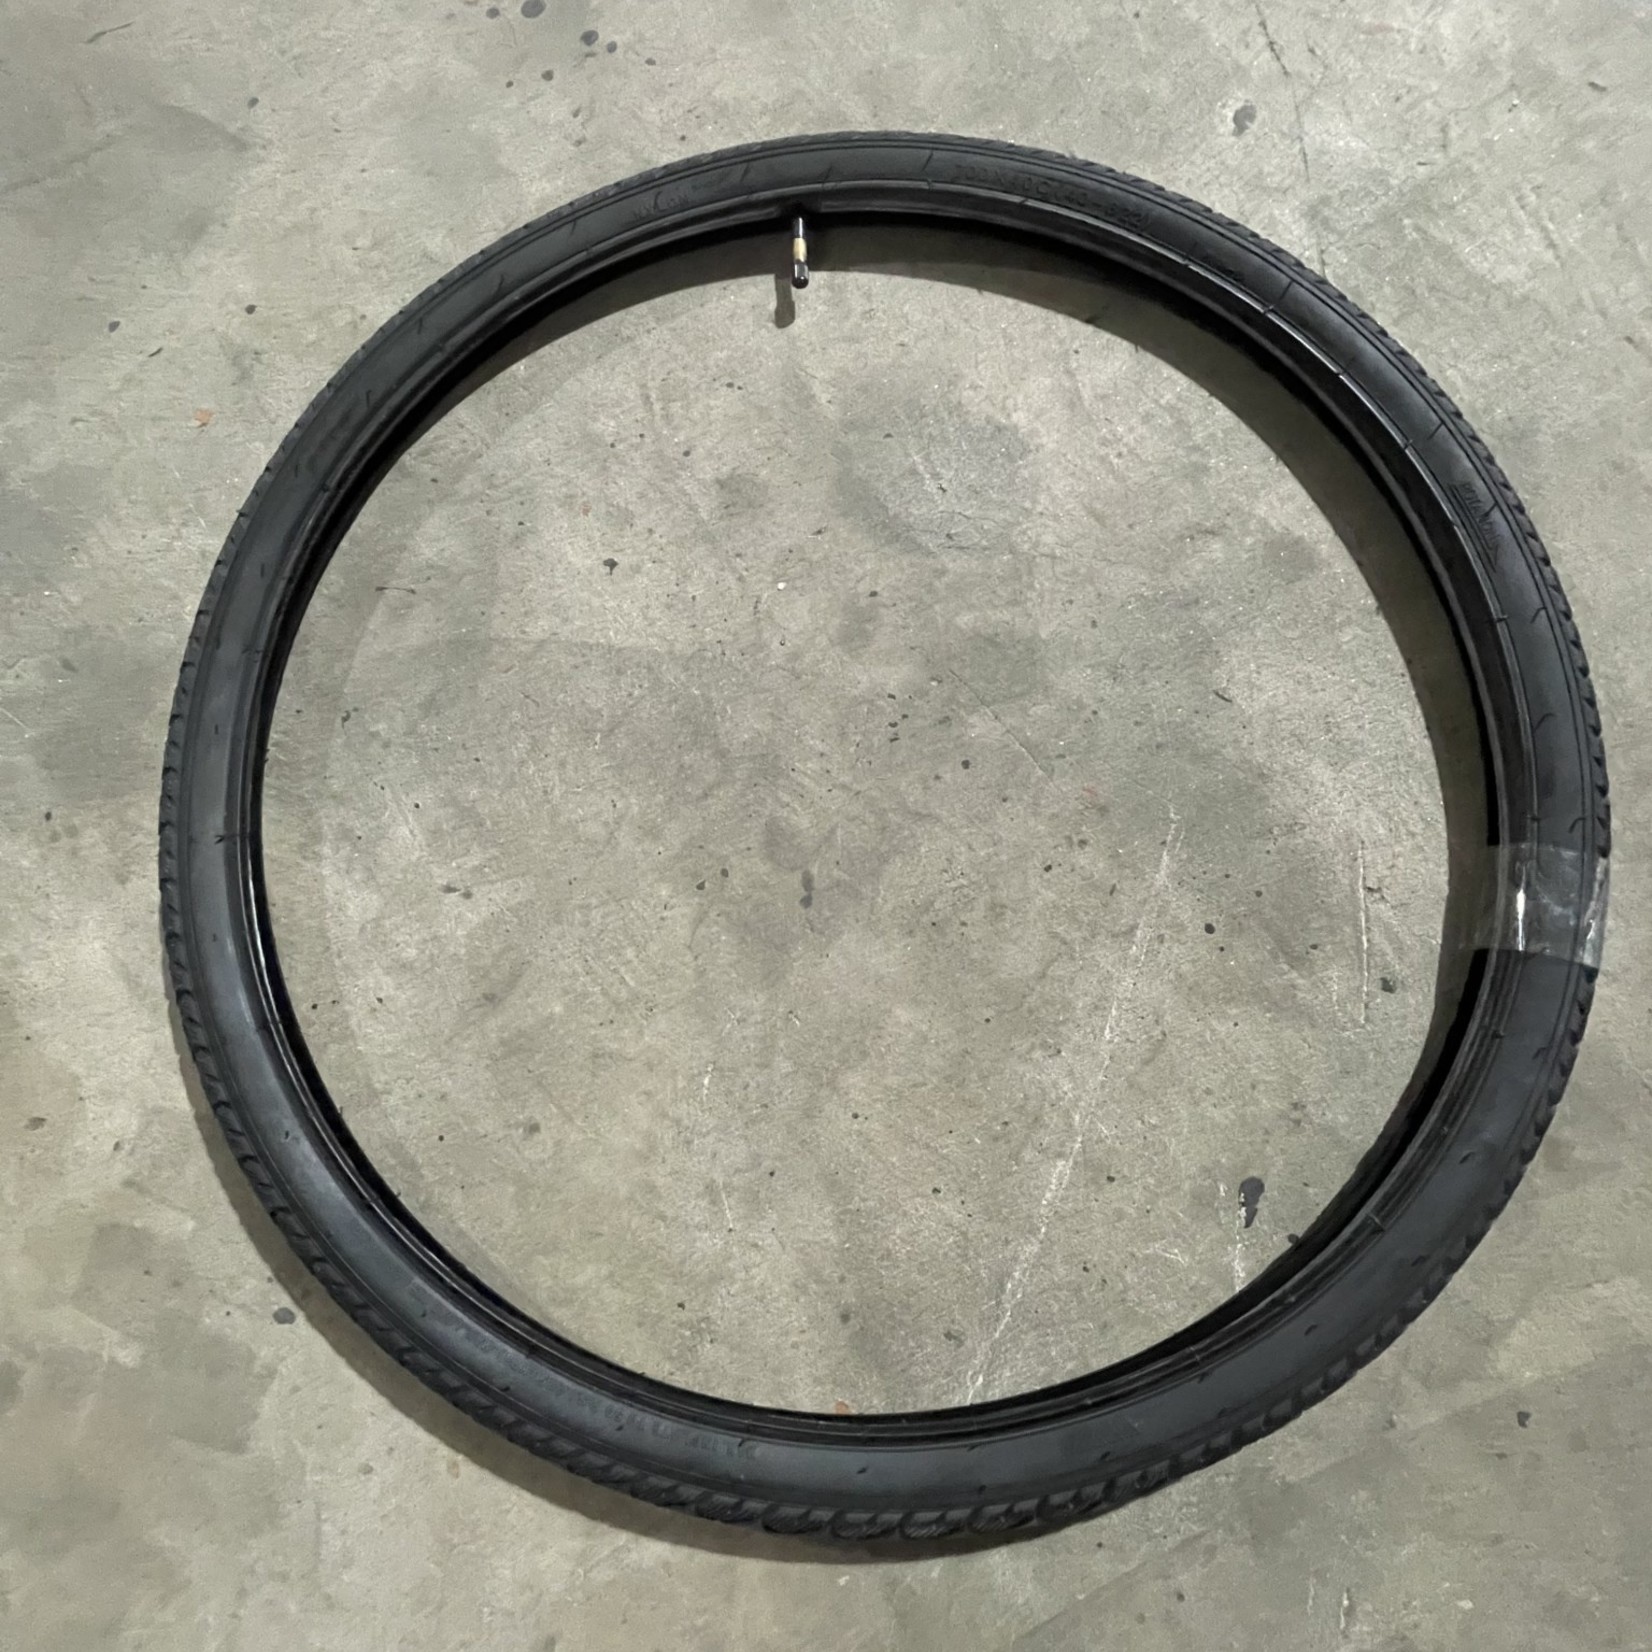 Bulk 26" x 1.50 Black Tire & Tube